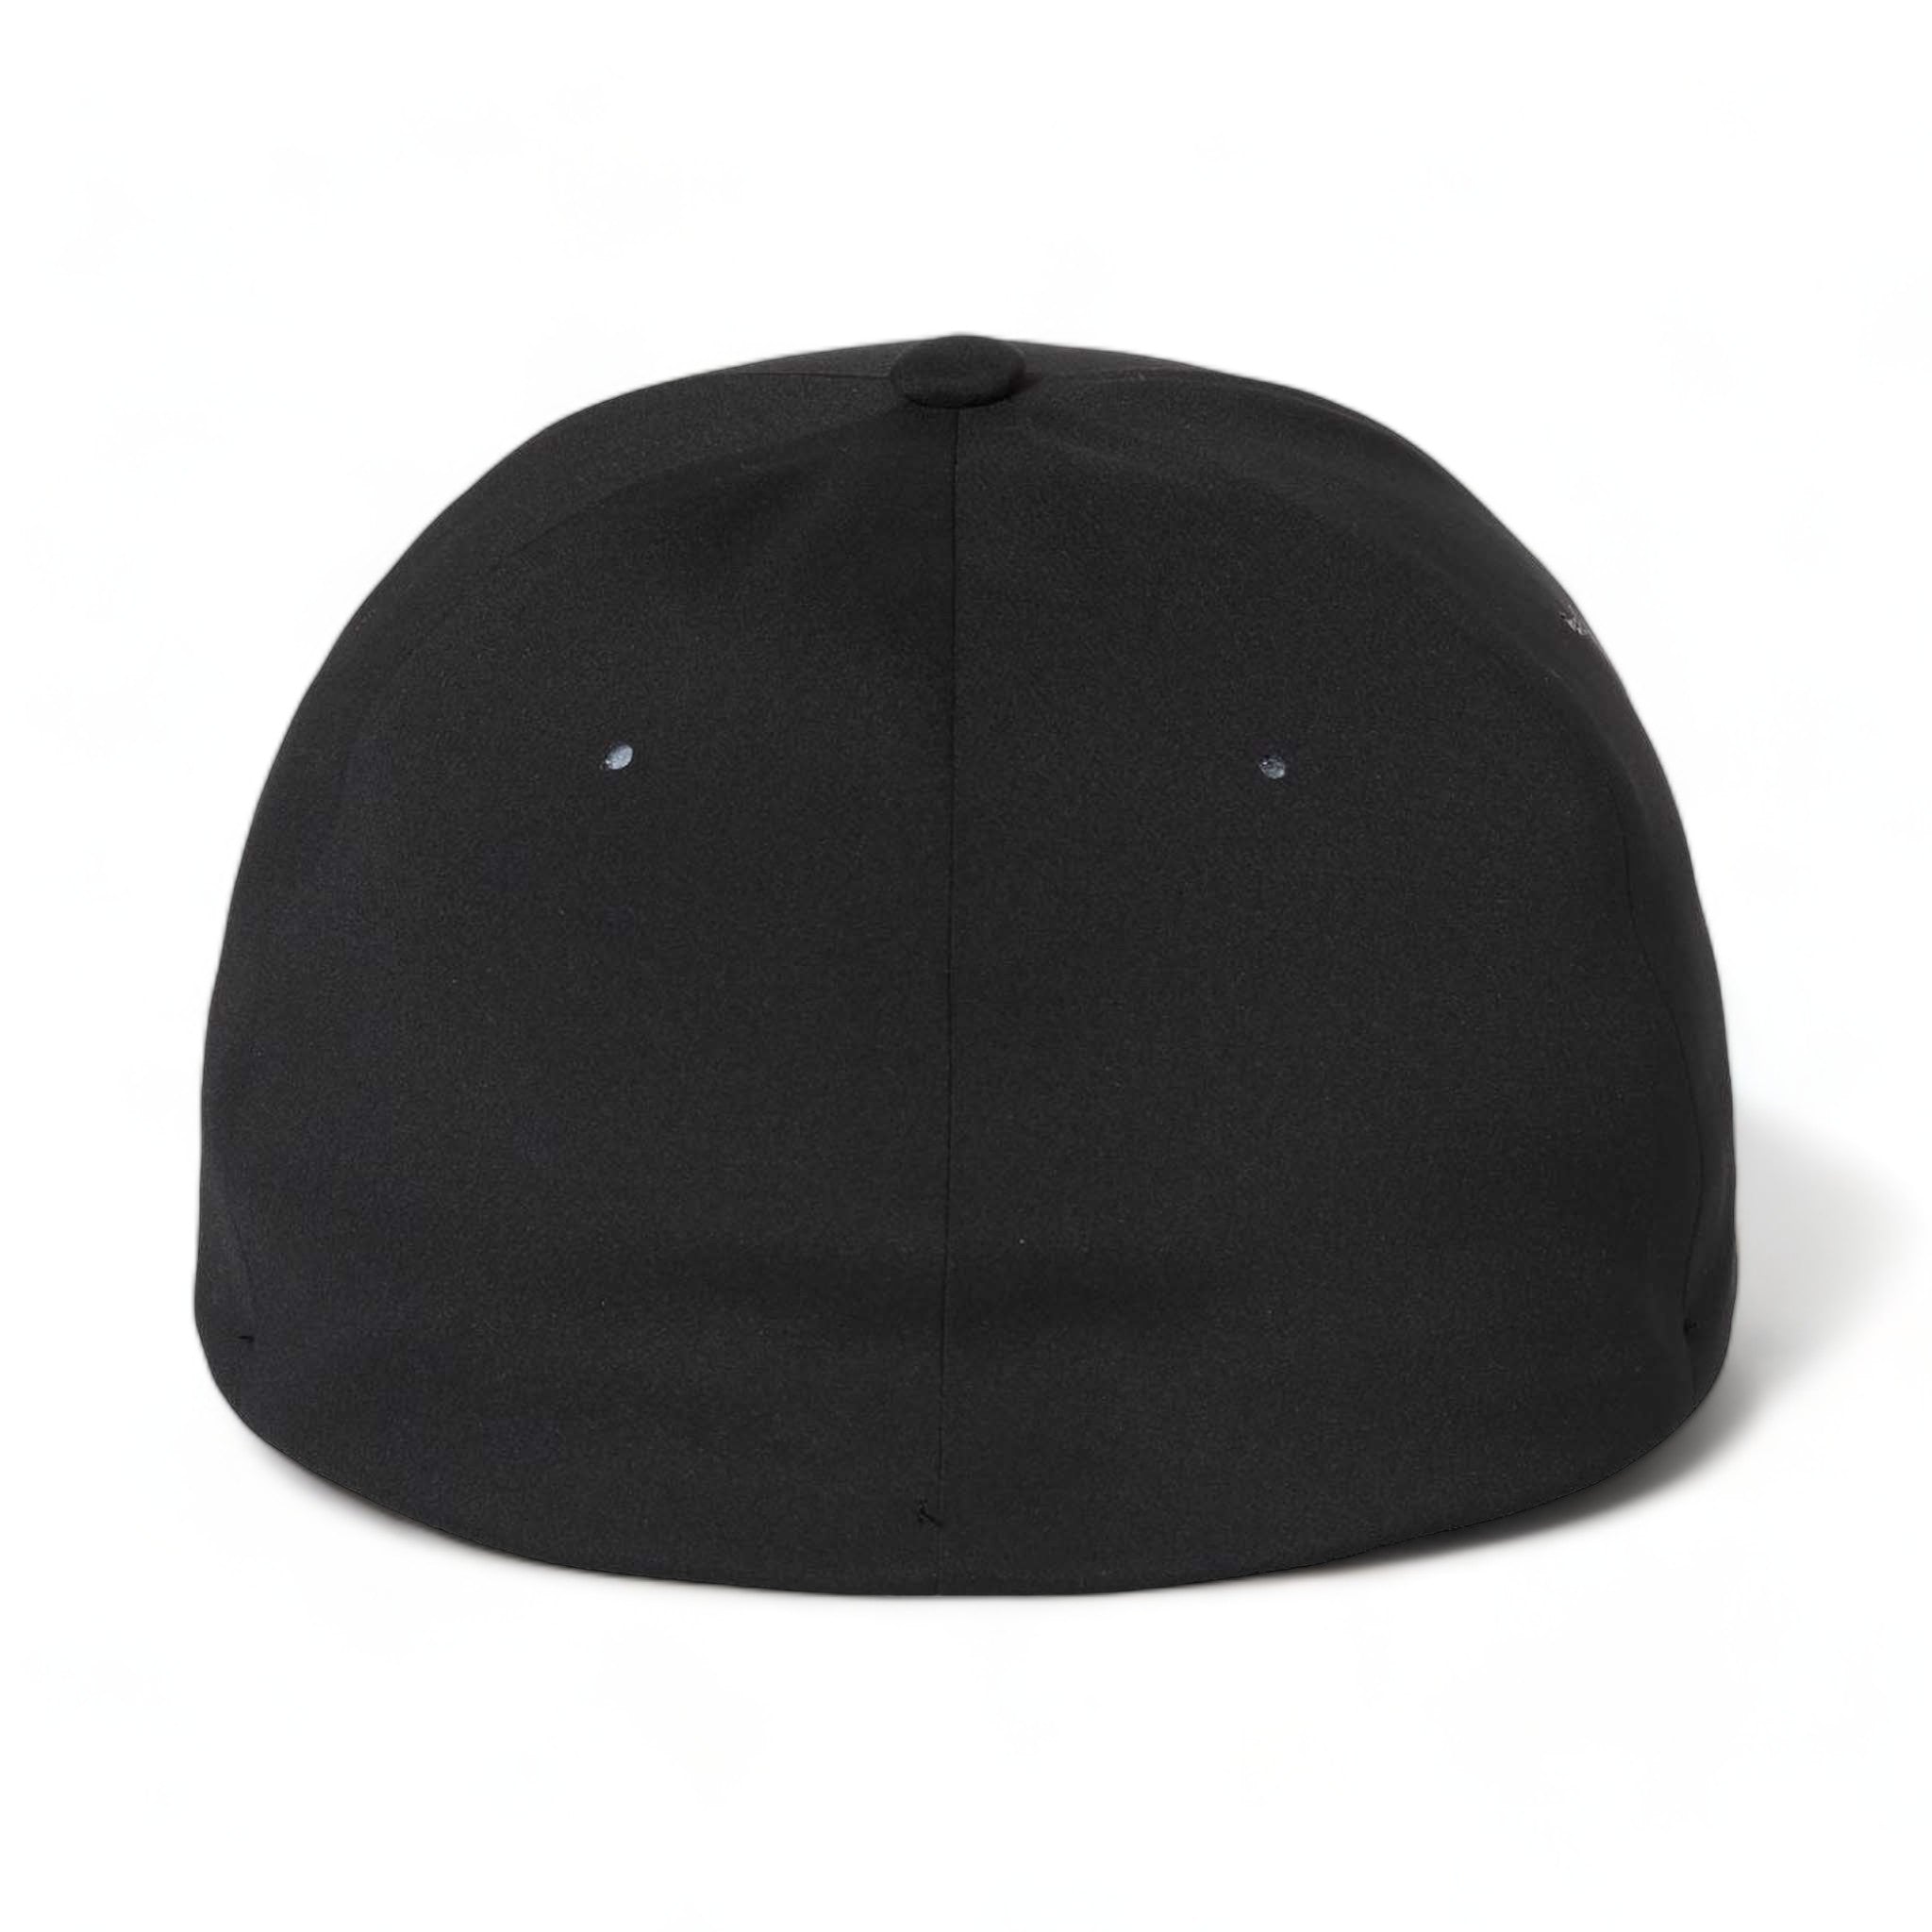 Back view of Flexfit 180 custom hat in black